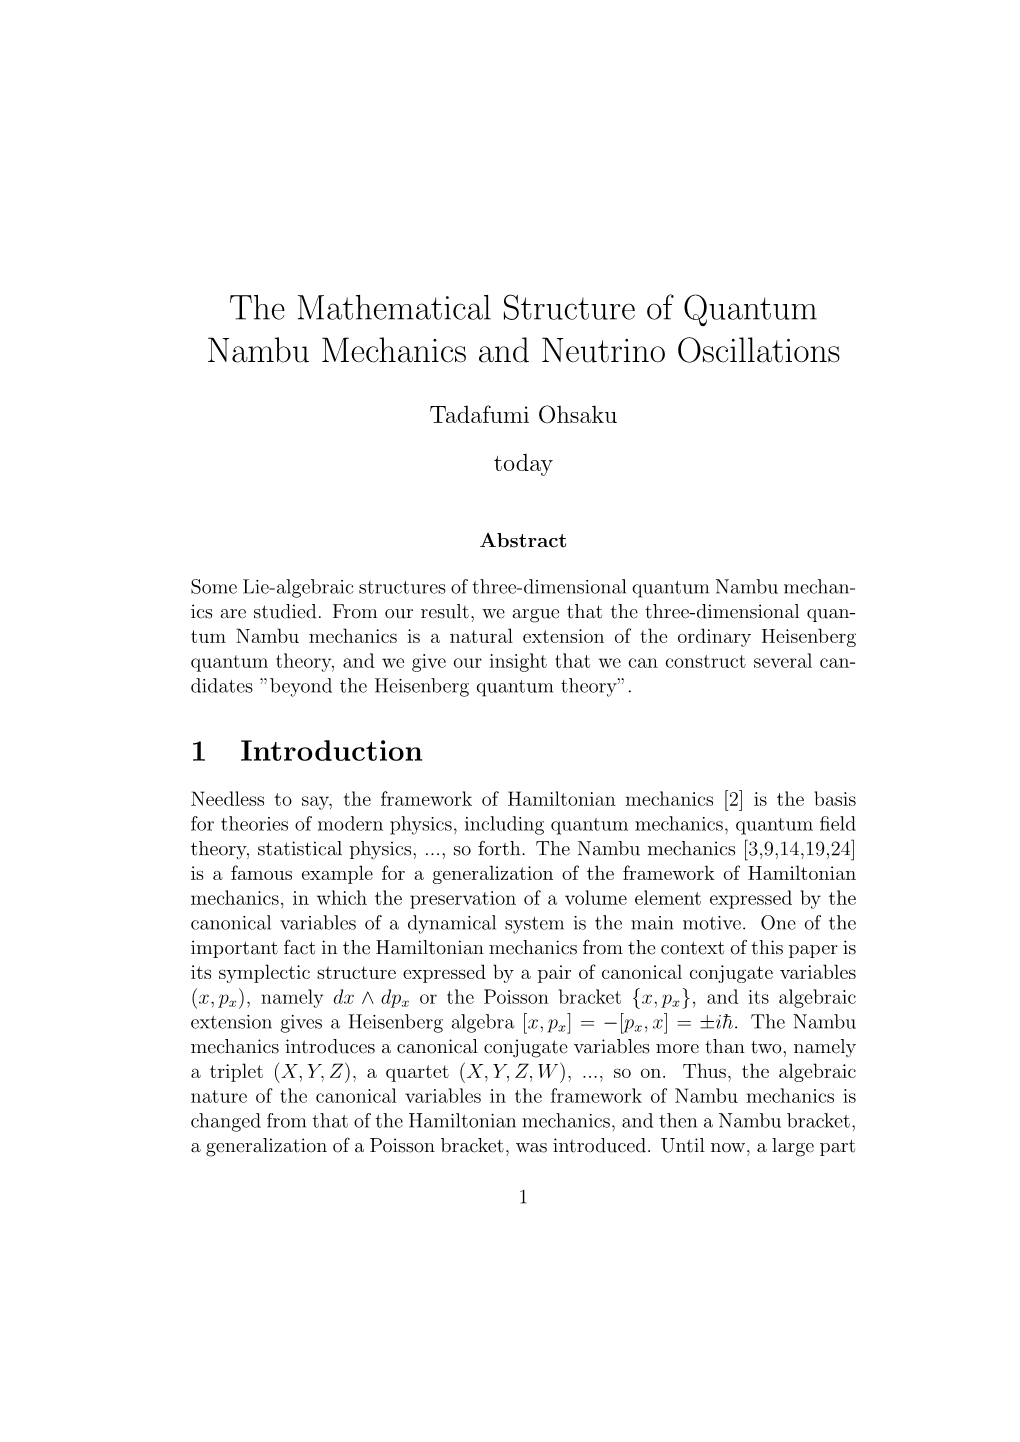 The Mathematical Structure of Quantum Nambu Mechanics and Neutrino Oscillations